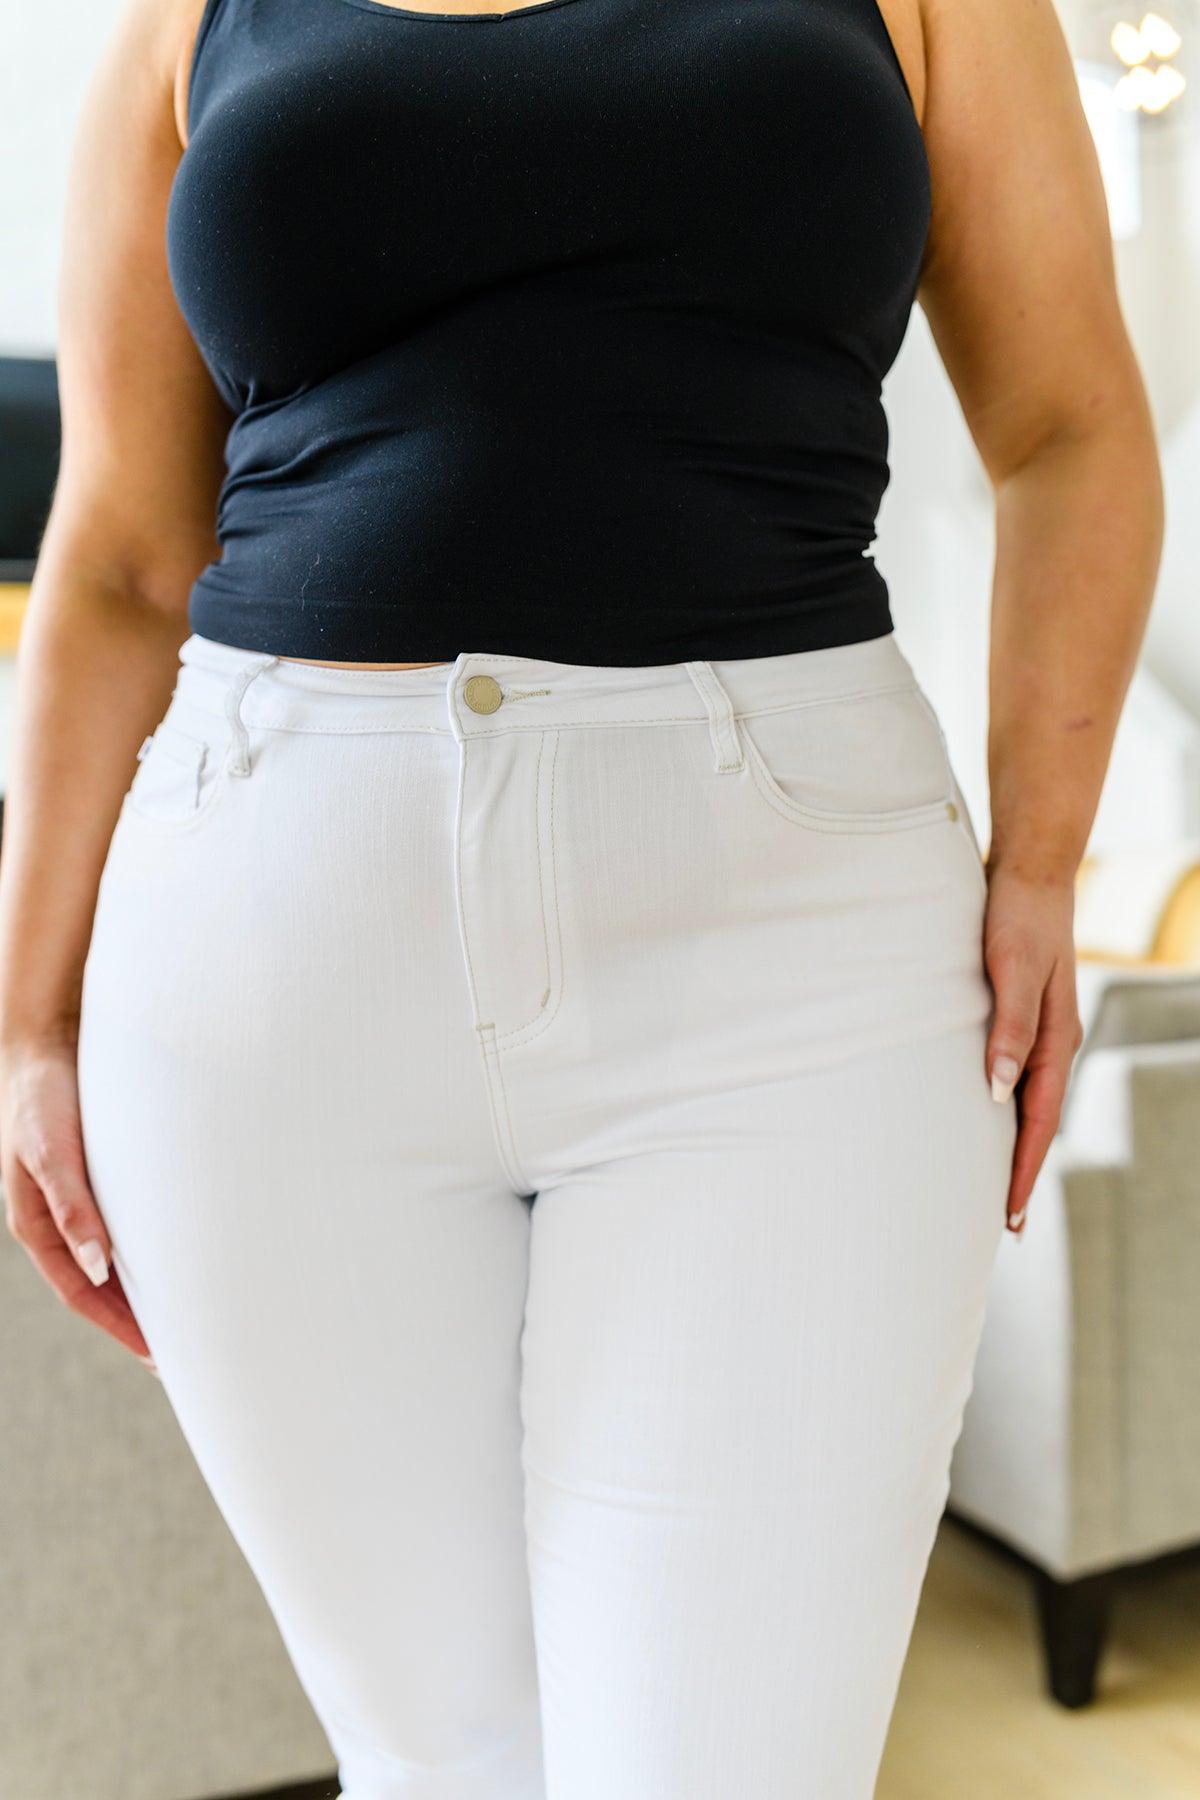 Lauren Hi-Waisted White Skinny Jeans - Hope Boutique & Apparel